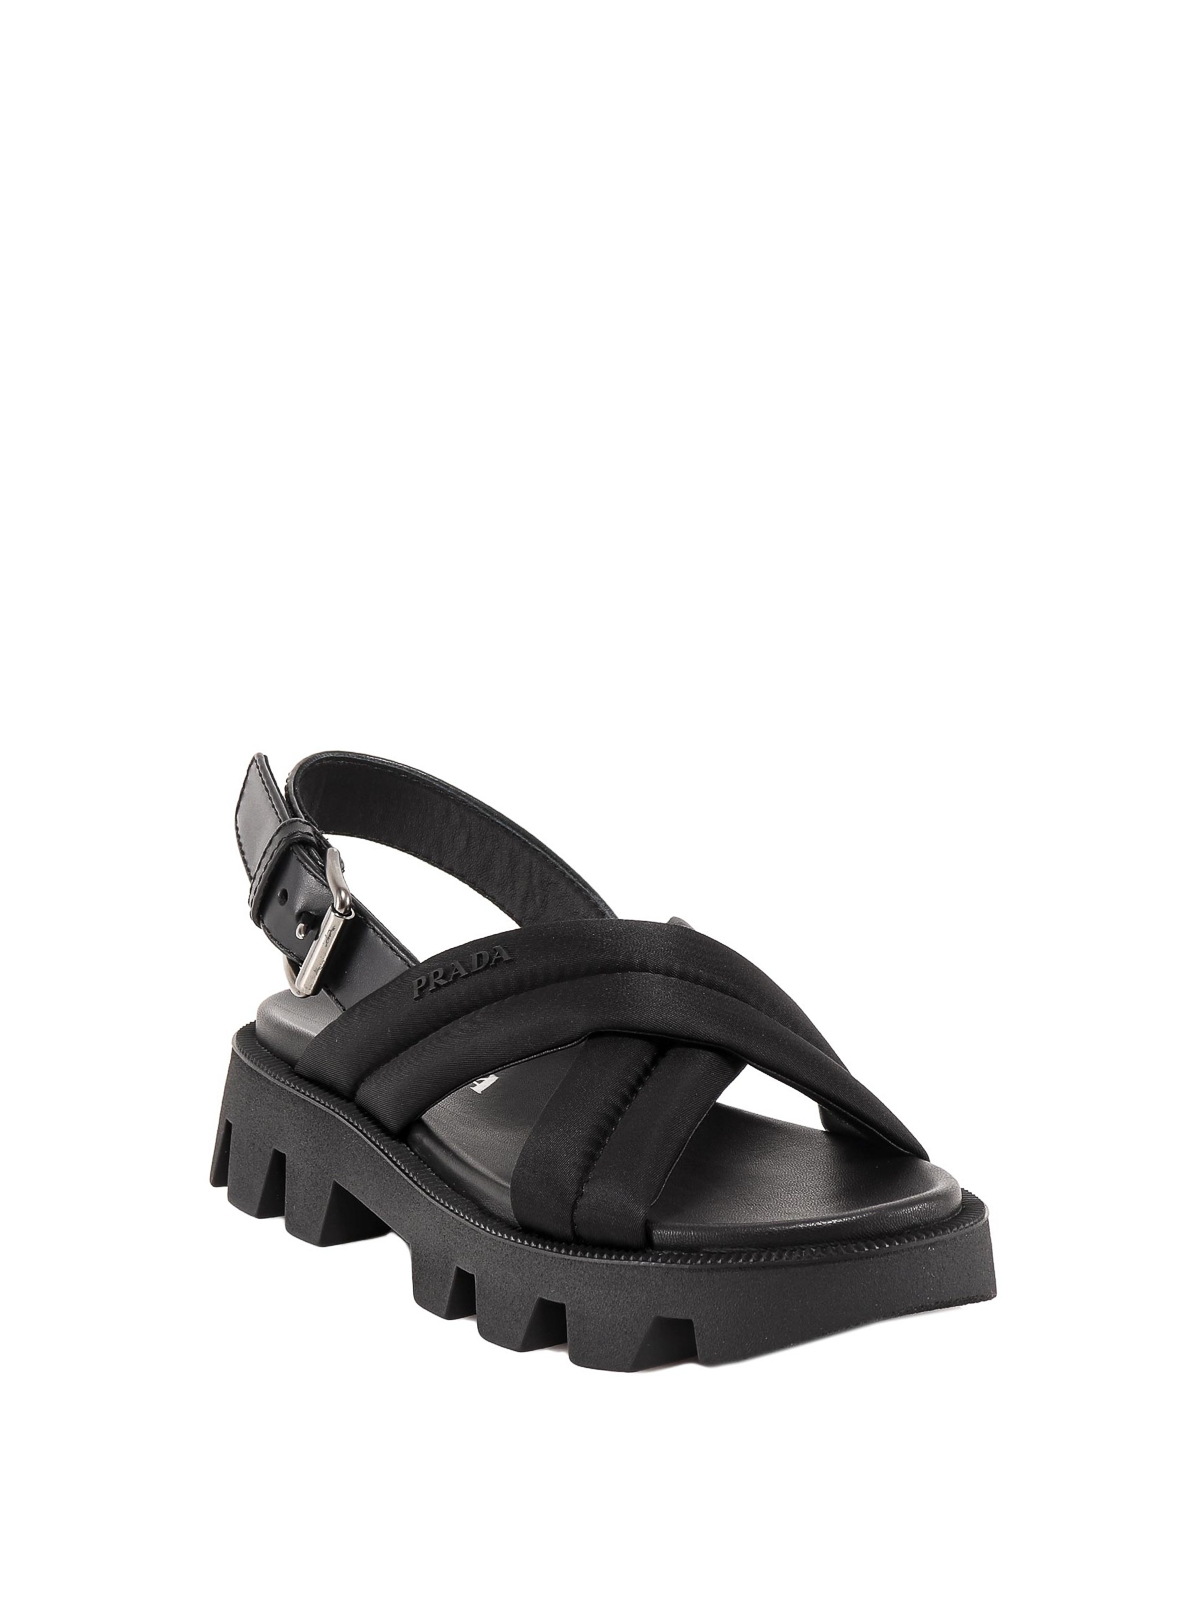 Prada - Nylon sandals - sandals - 1X265MLSVF0002 | Shop online at iKRIX